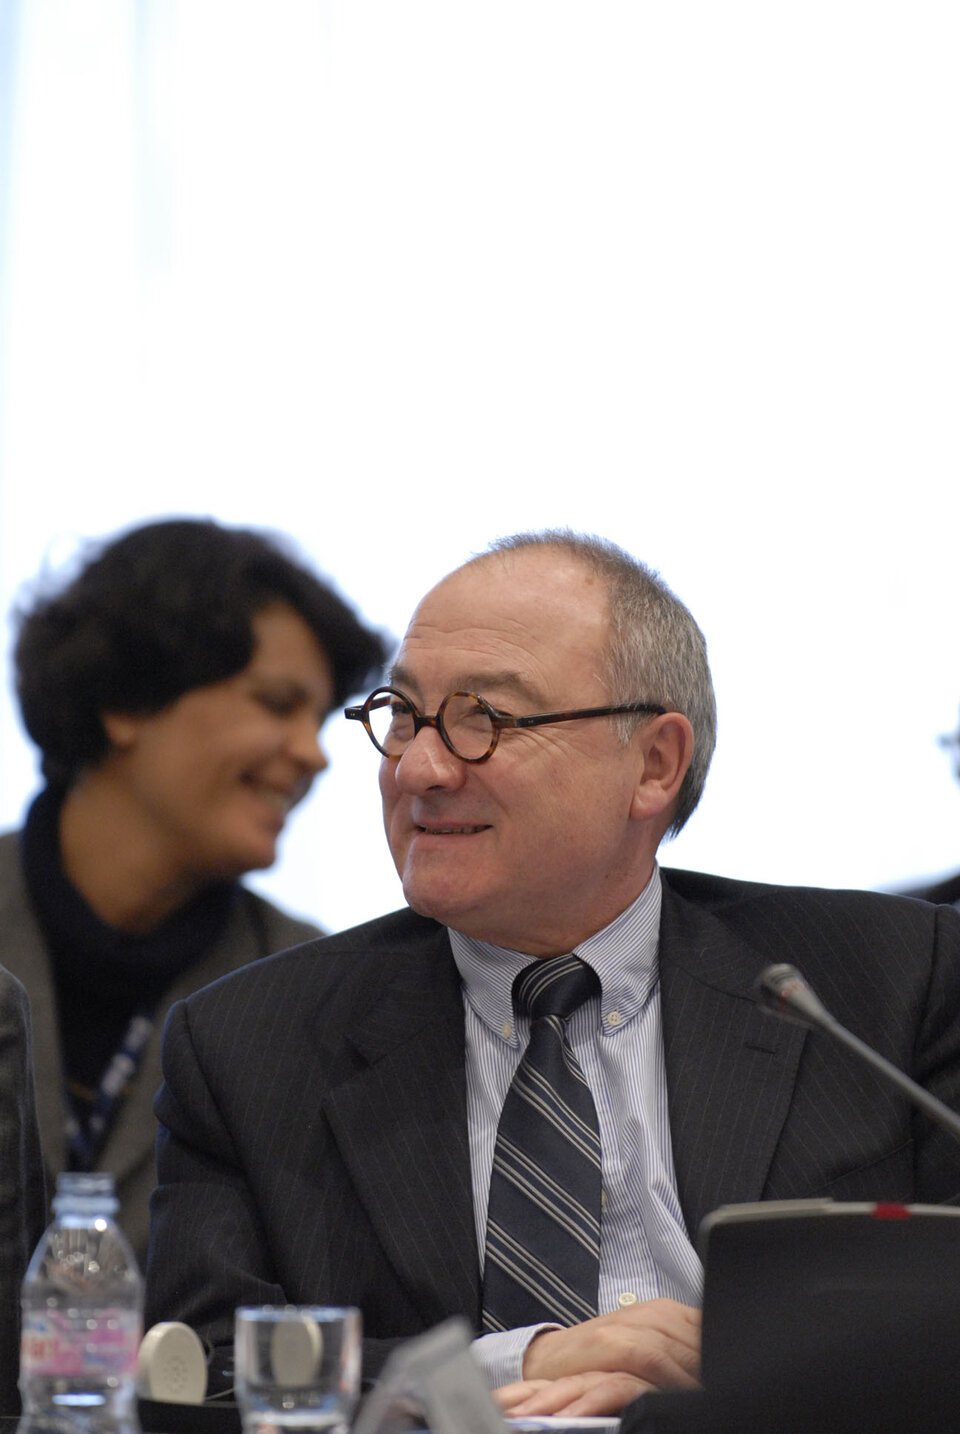 Mr Jean-Jacques Dordain, Director General of ESA